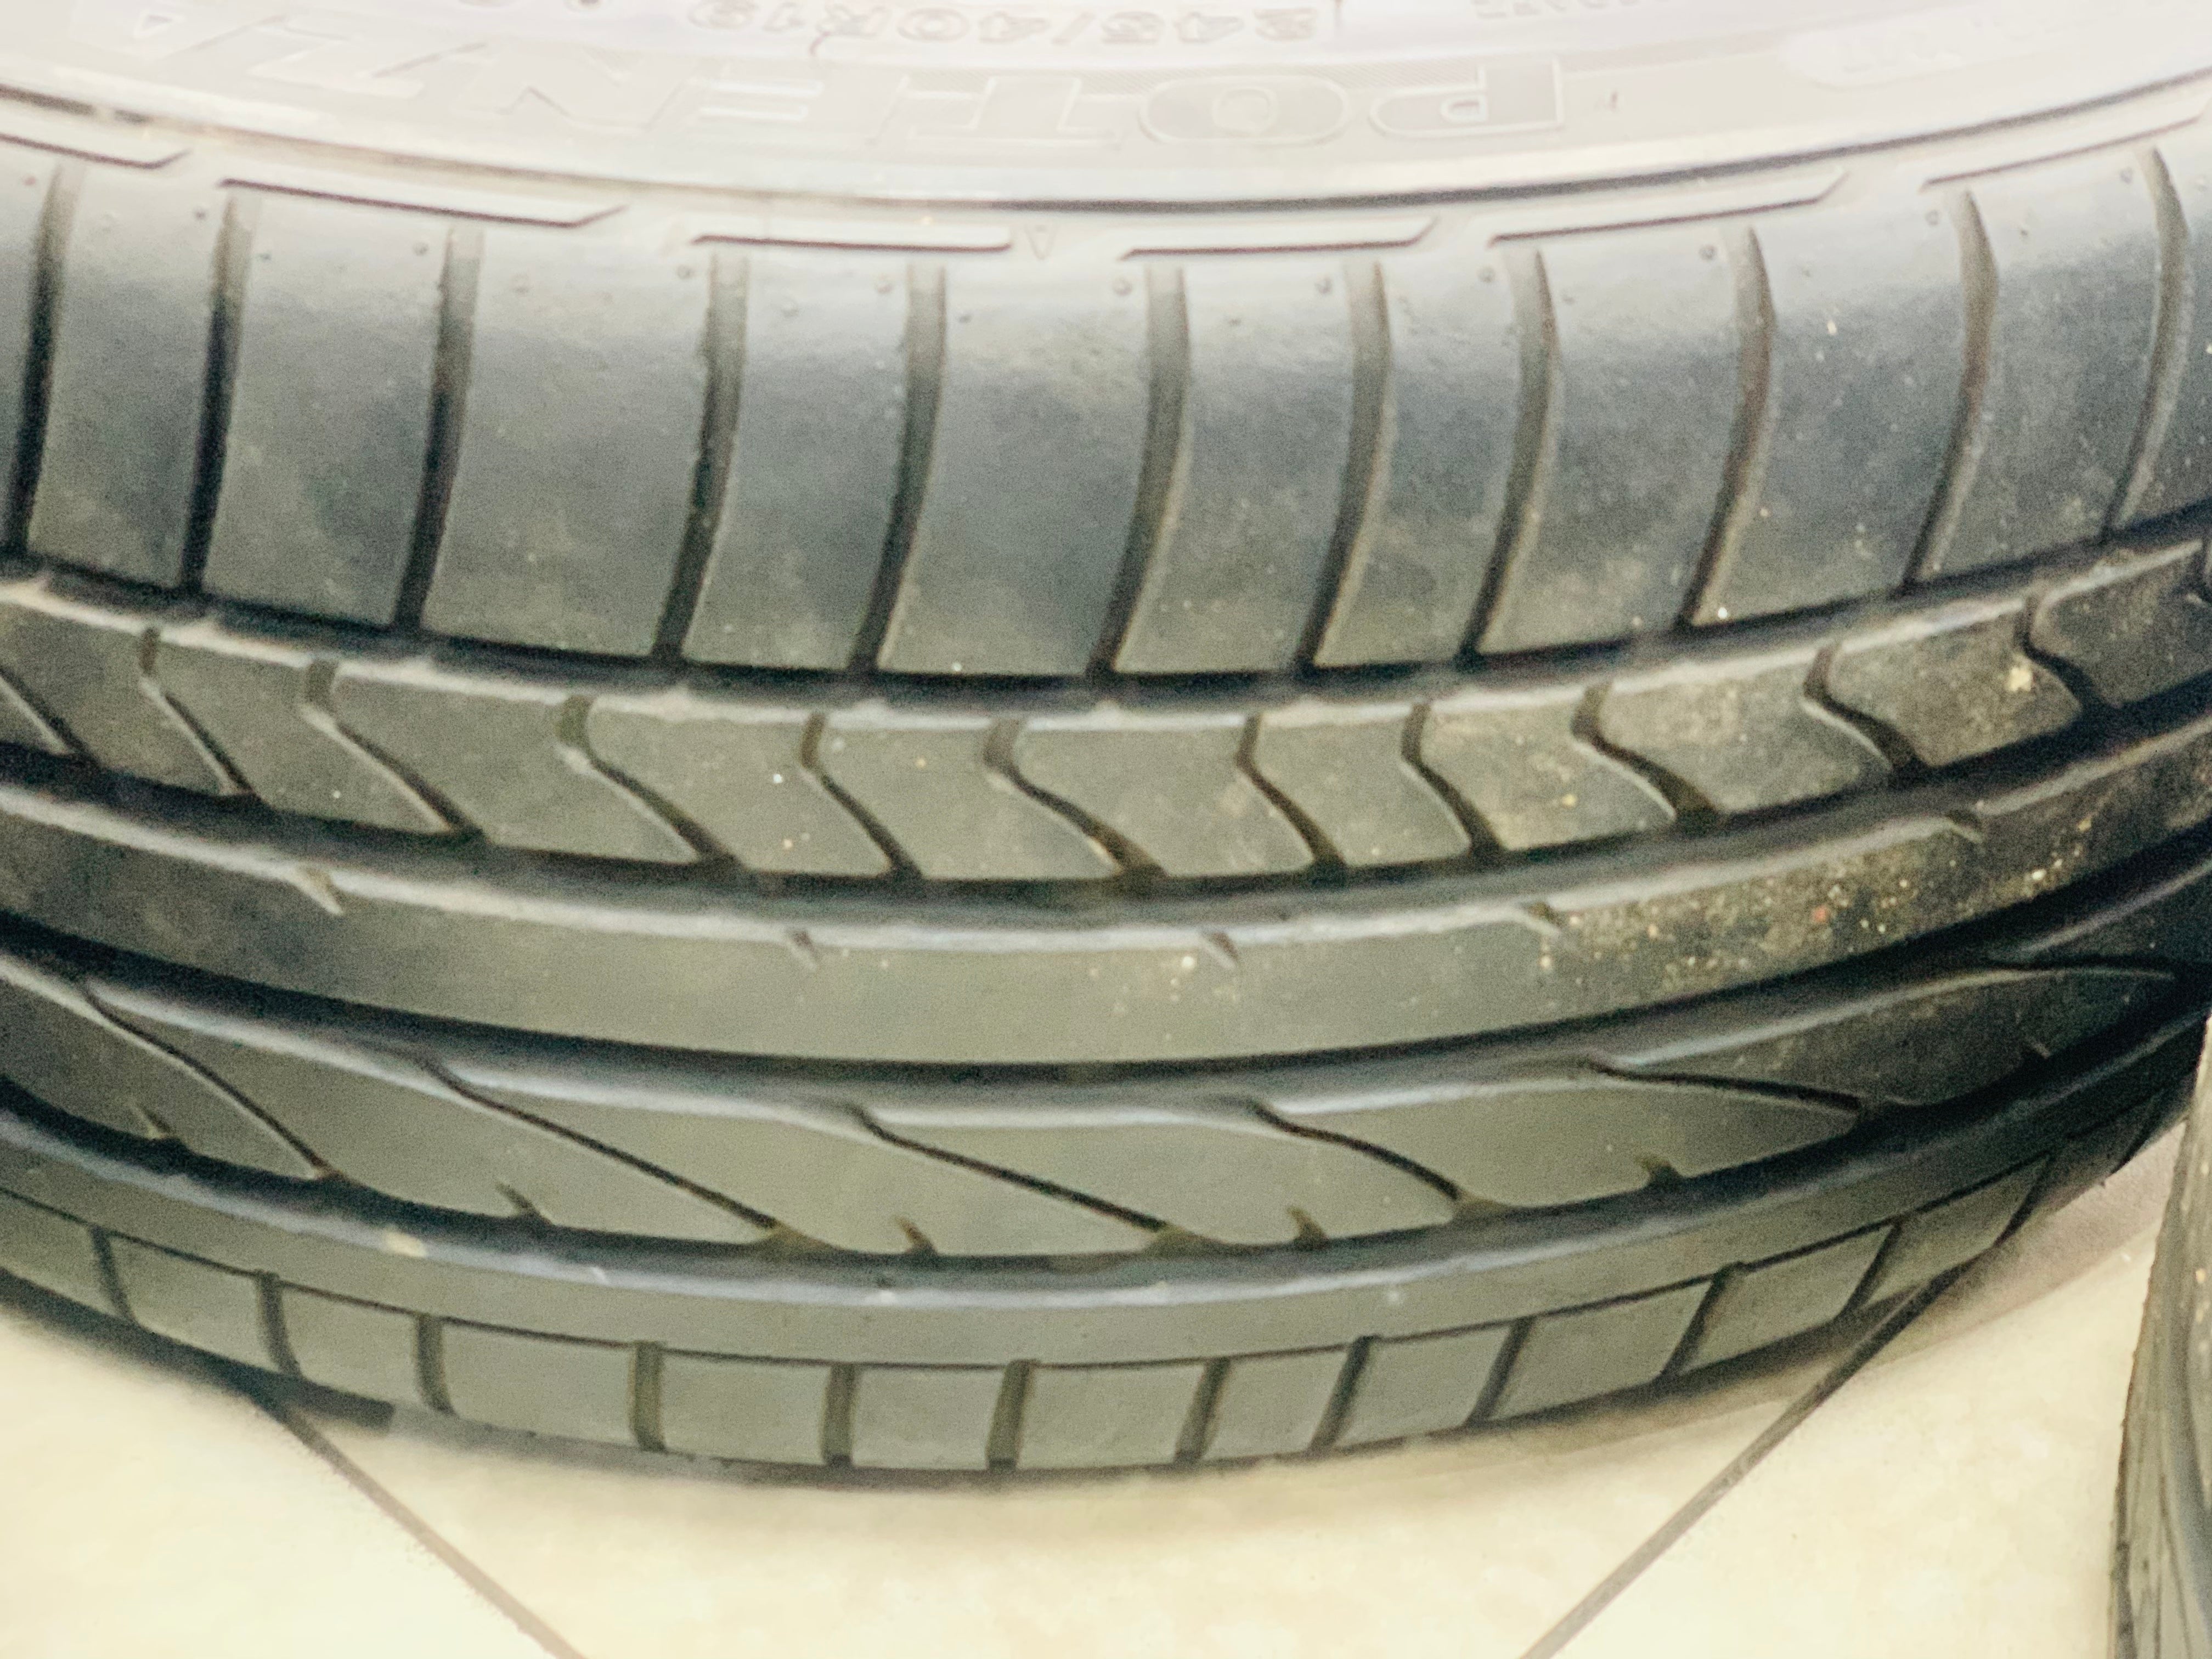 CHEV LUMINA SSV PREOWNED chrome rims & tyres